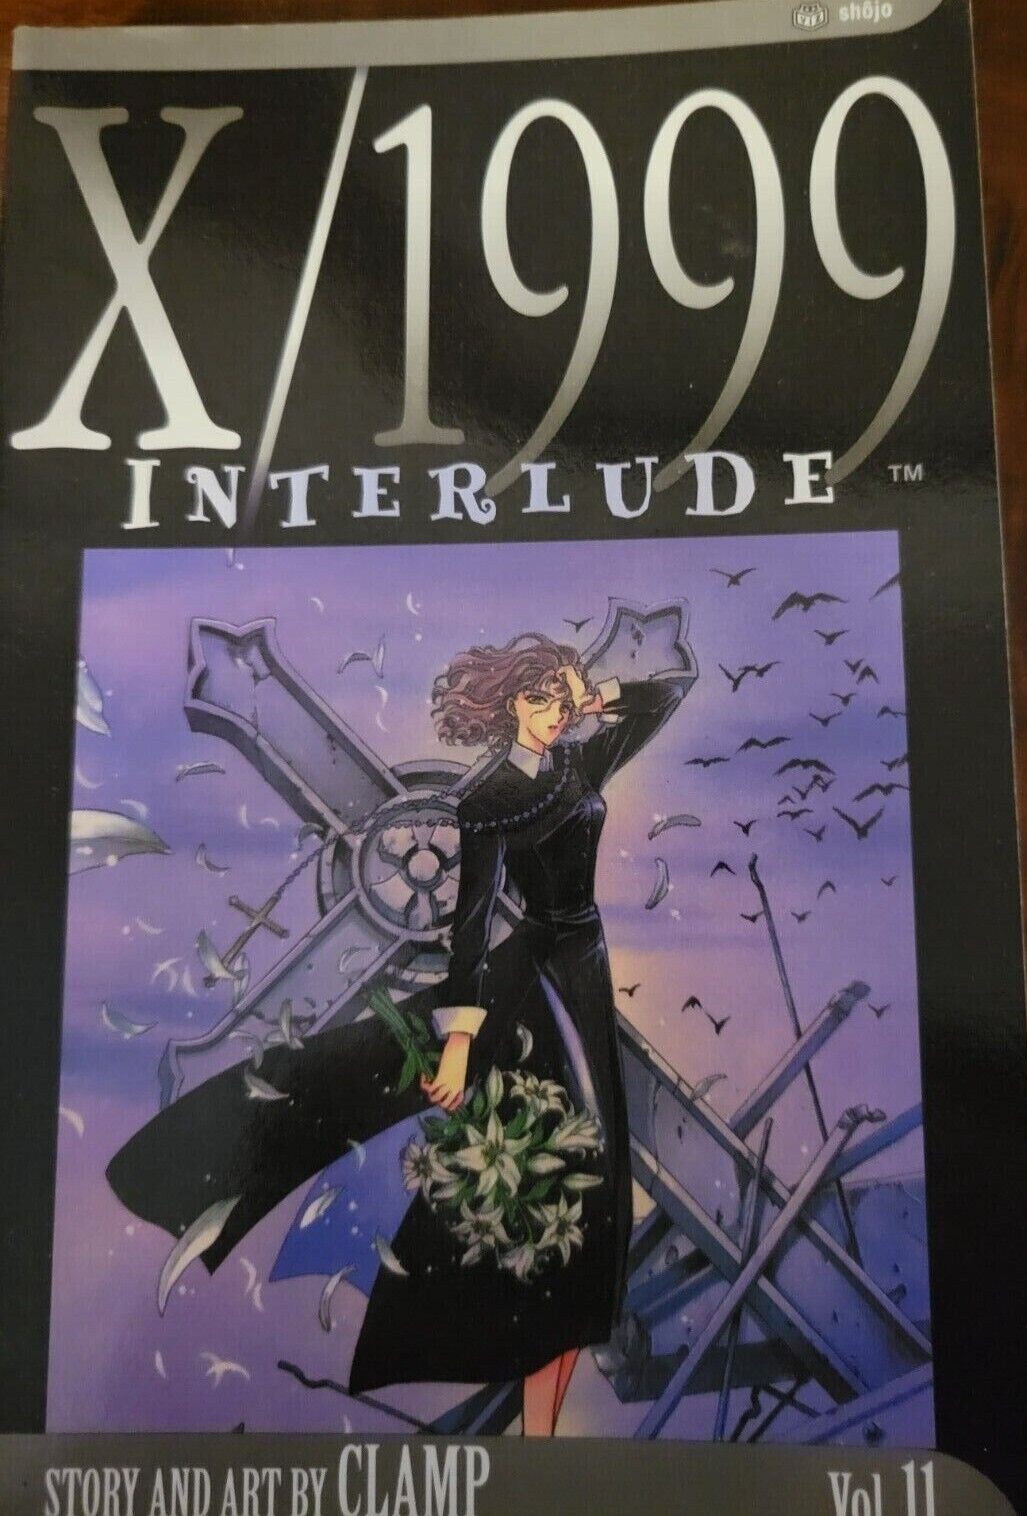 X/1999 Interlude VOLUME 11 CLamp manga